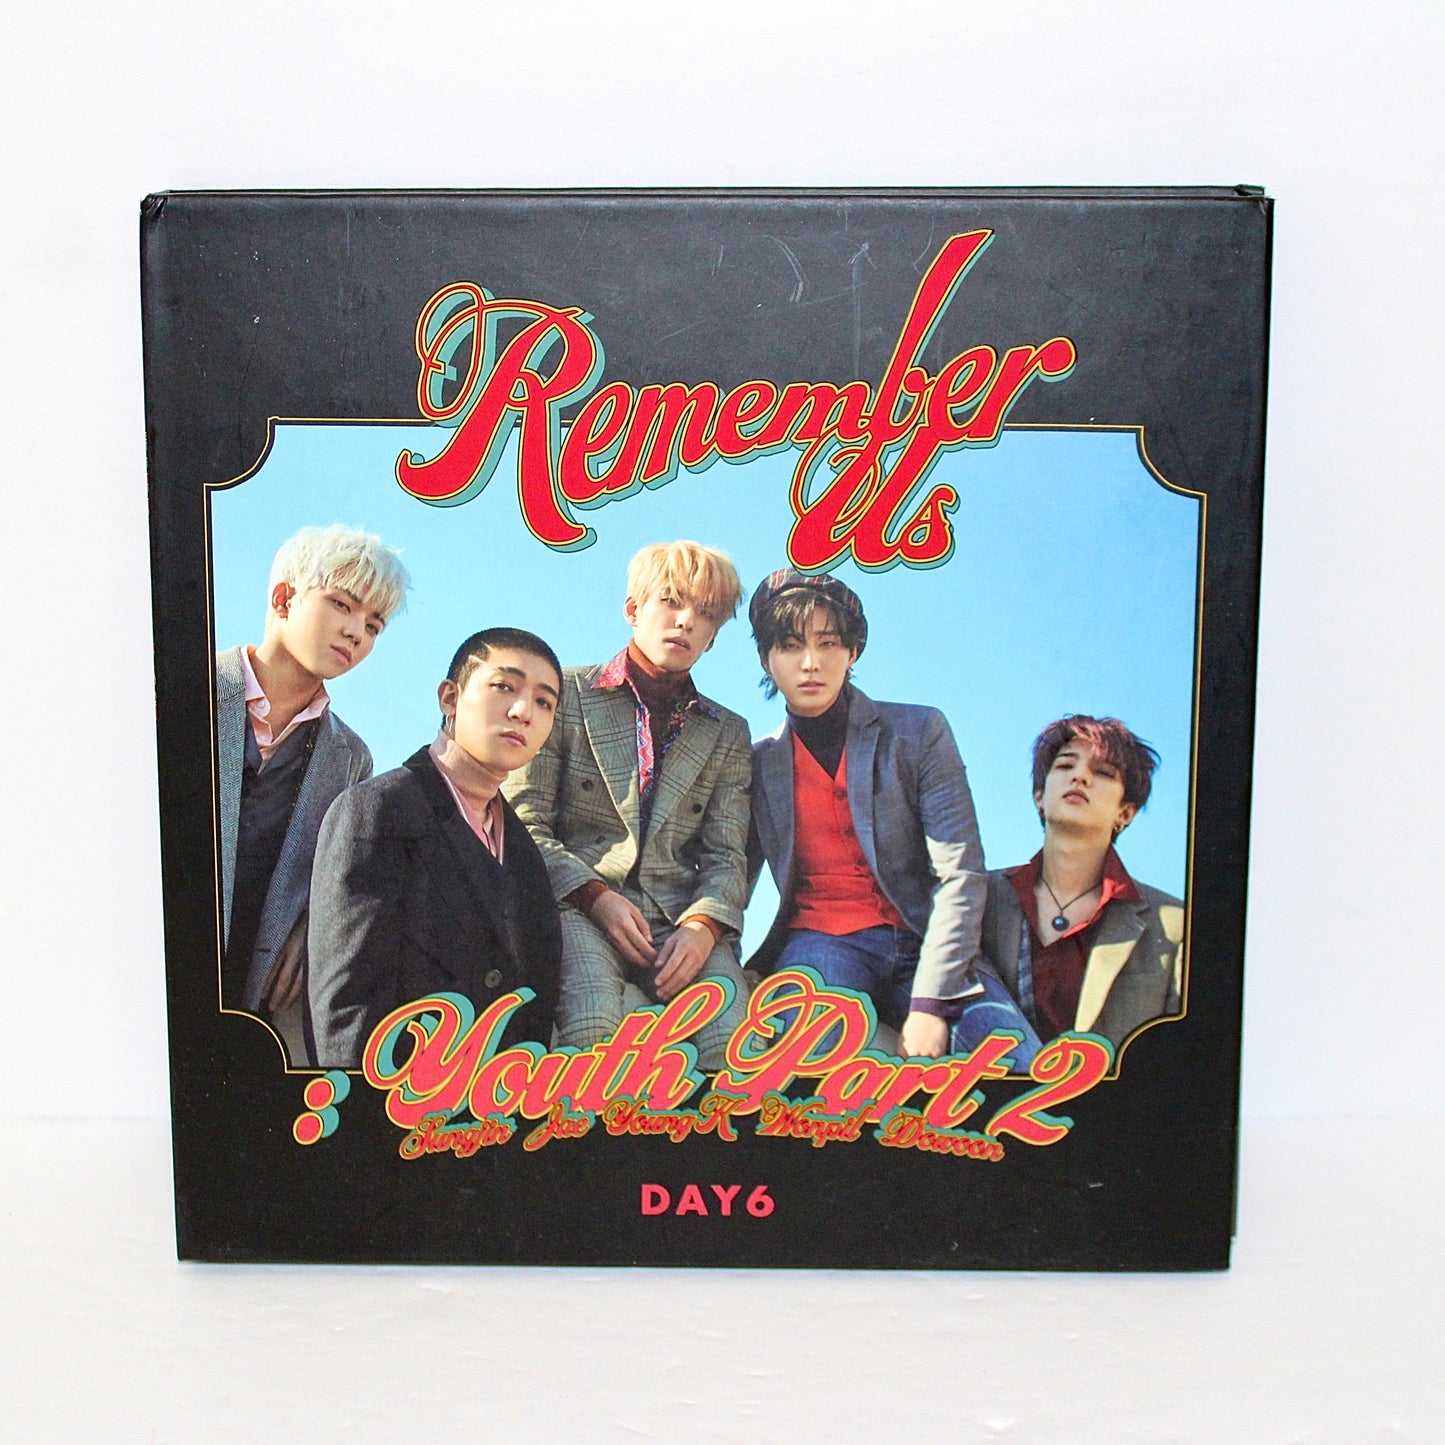 DAY6 4th Mini Album - Remember Us: Youth Pt. 2 | Rew Ver.